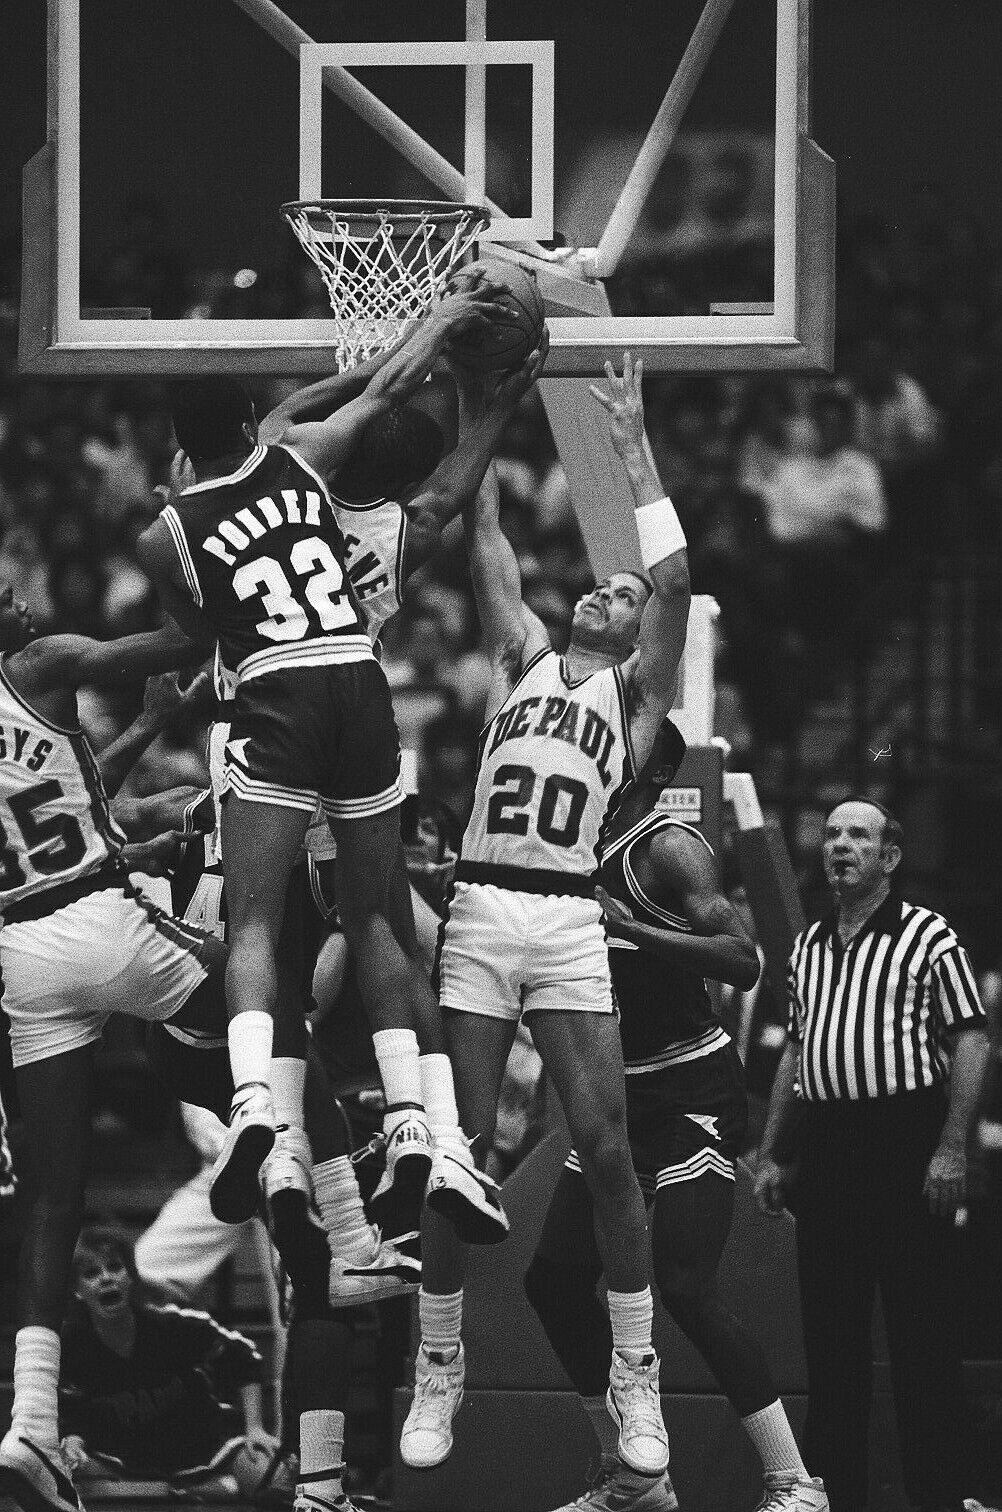 LD125-46 1986 College Basketball DePaul UAB Blazers (55) ORIG 35mm B&W NEGATIVES Без бренда - фотография #7